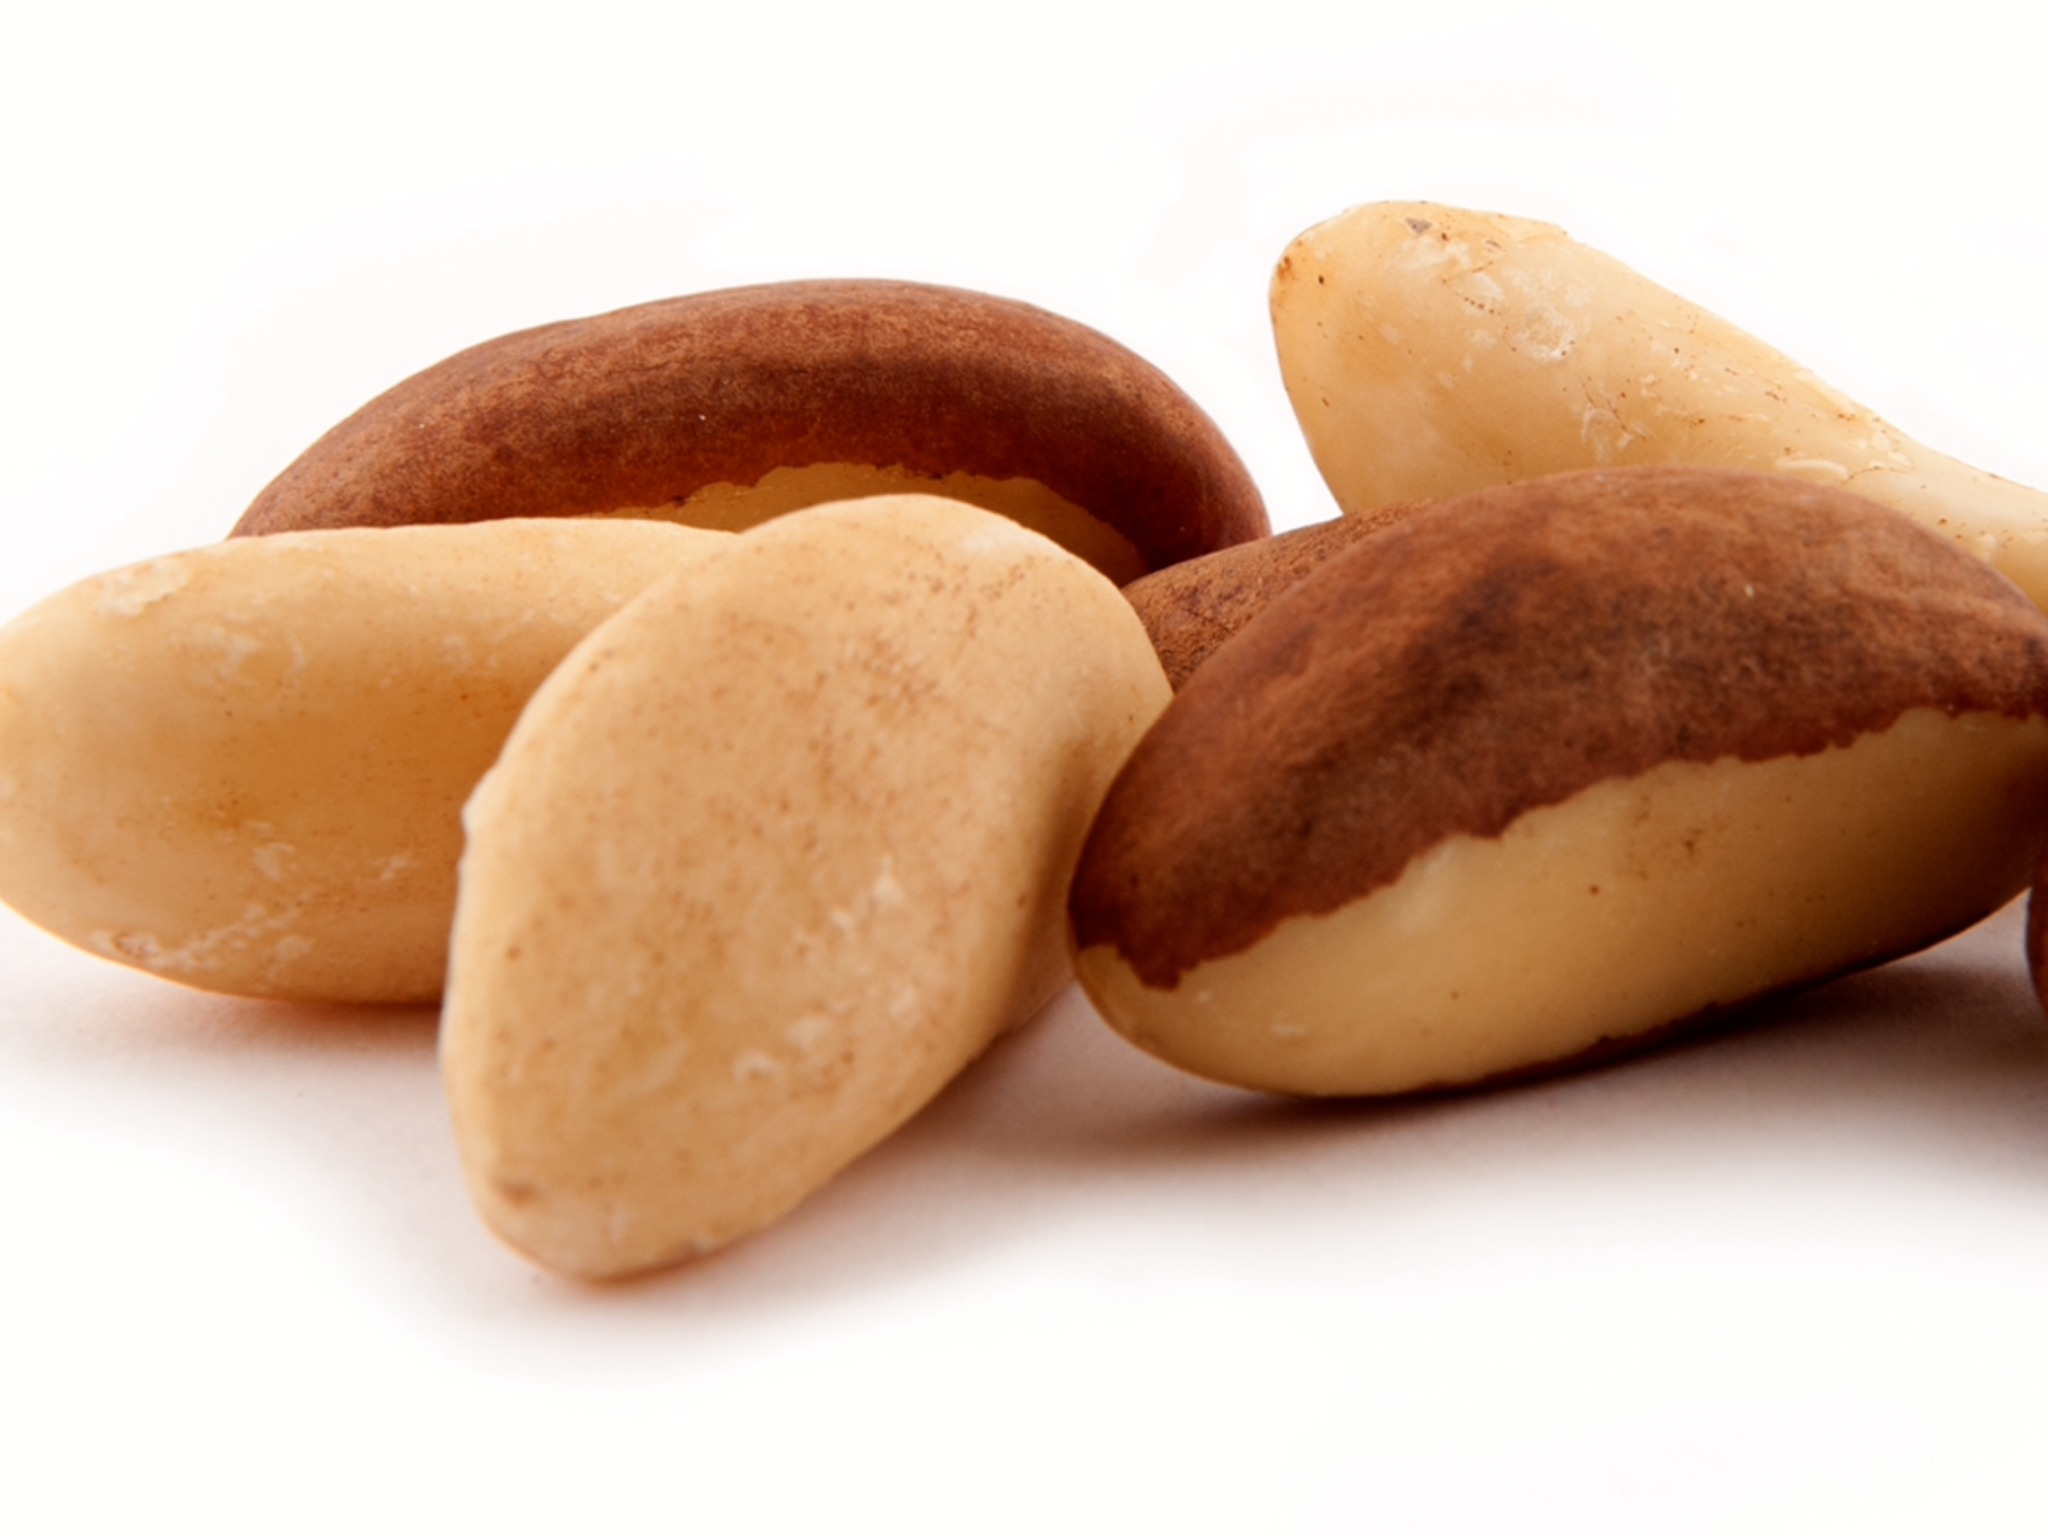 Brazil Nuts.